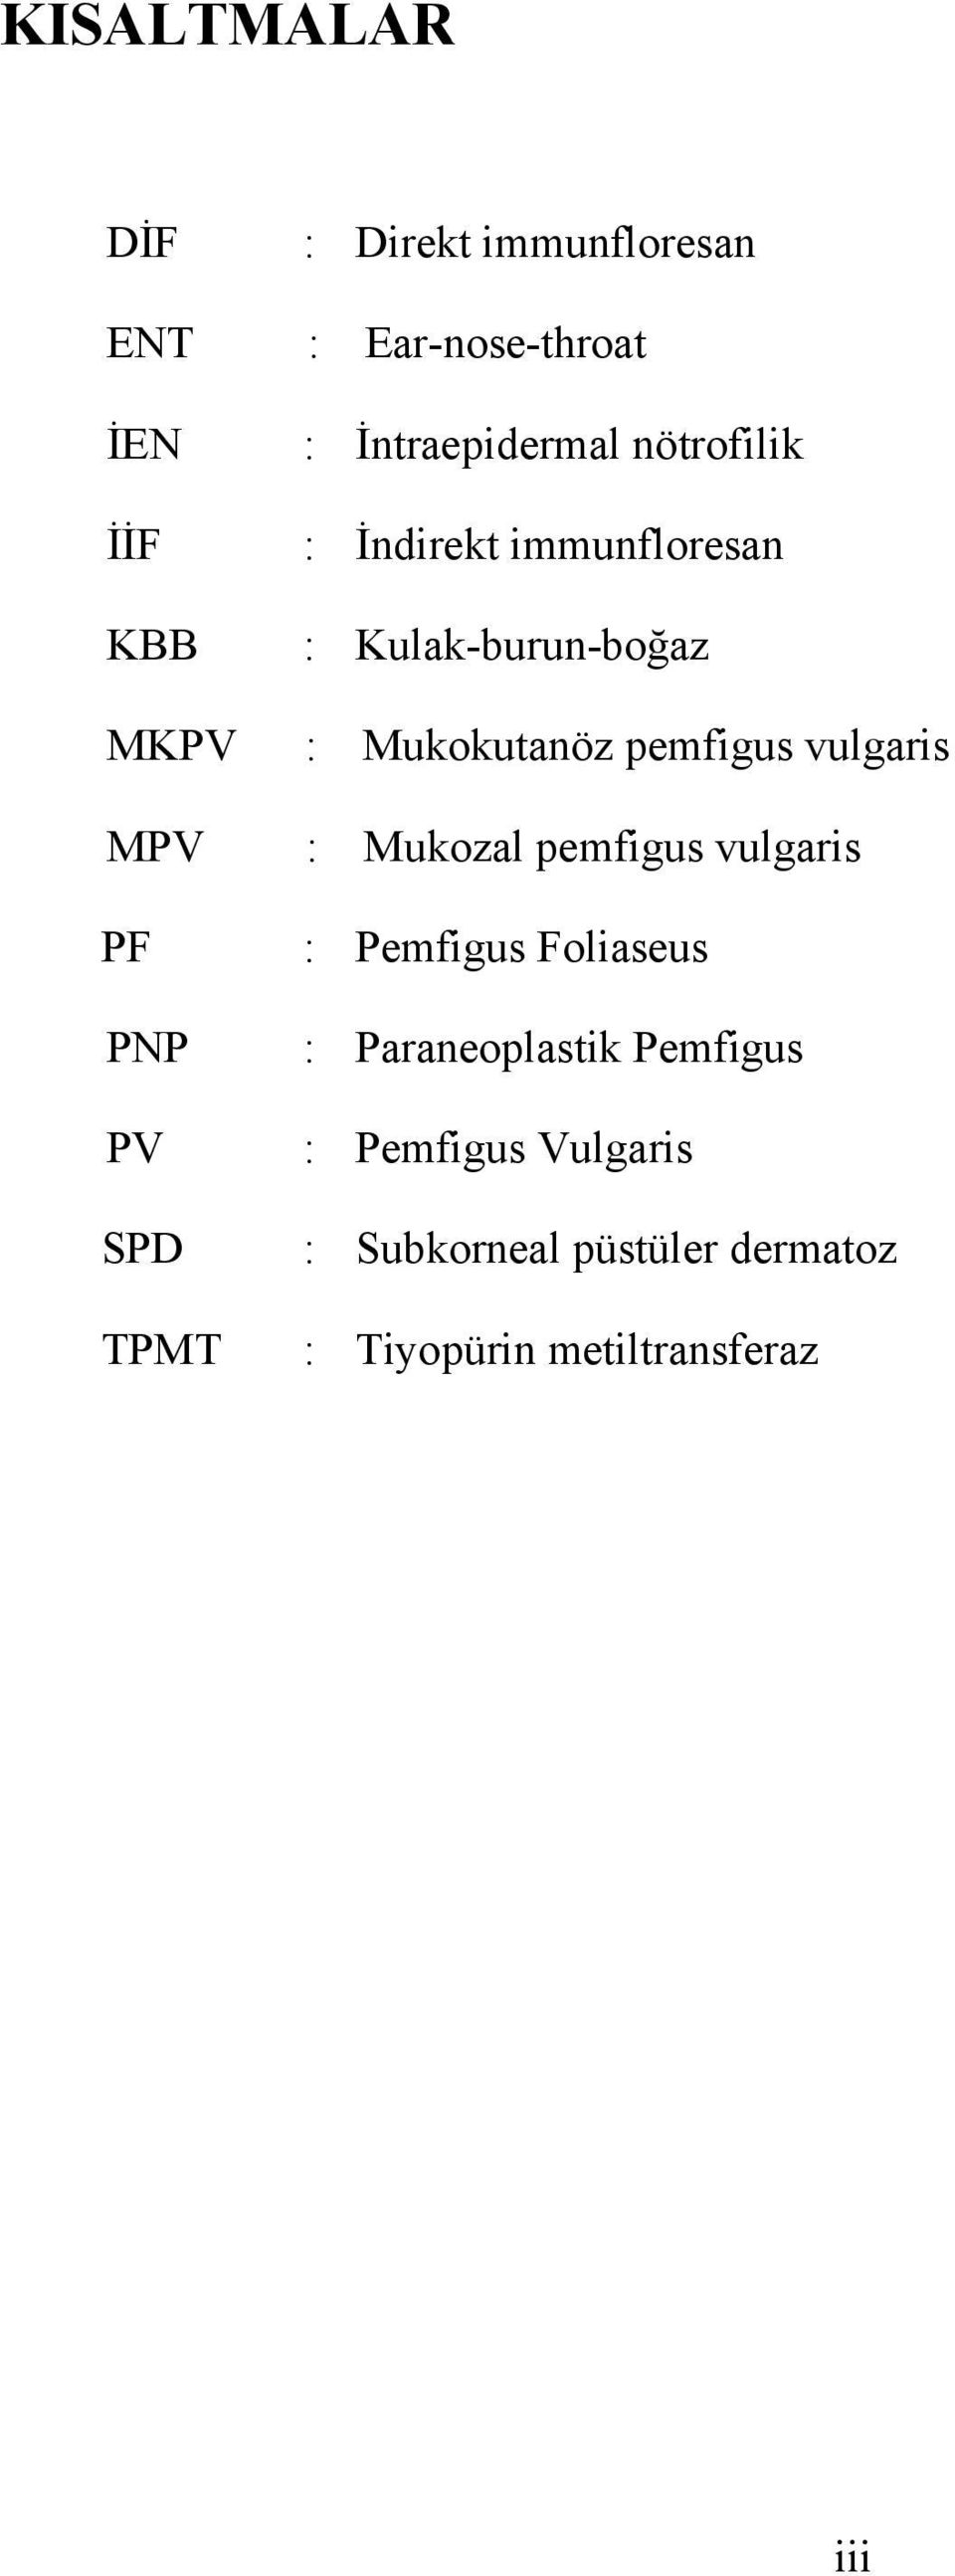 Mukokutanöz pemfigus vulgaris : Mukozal pemfigus vulgaris : Pemfigus Foliaseus :